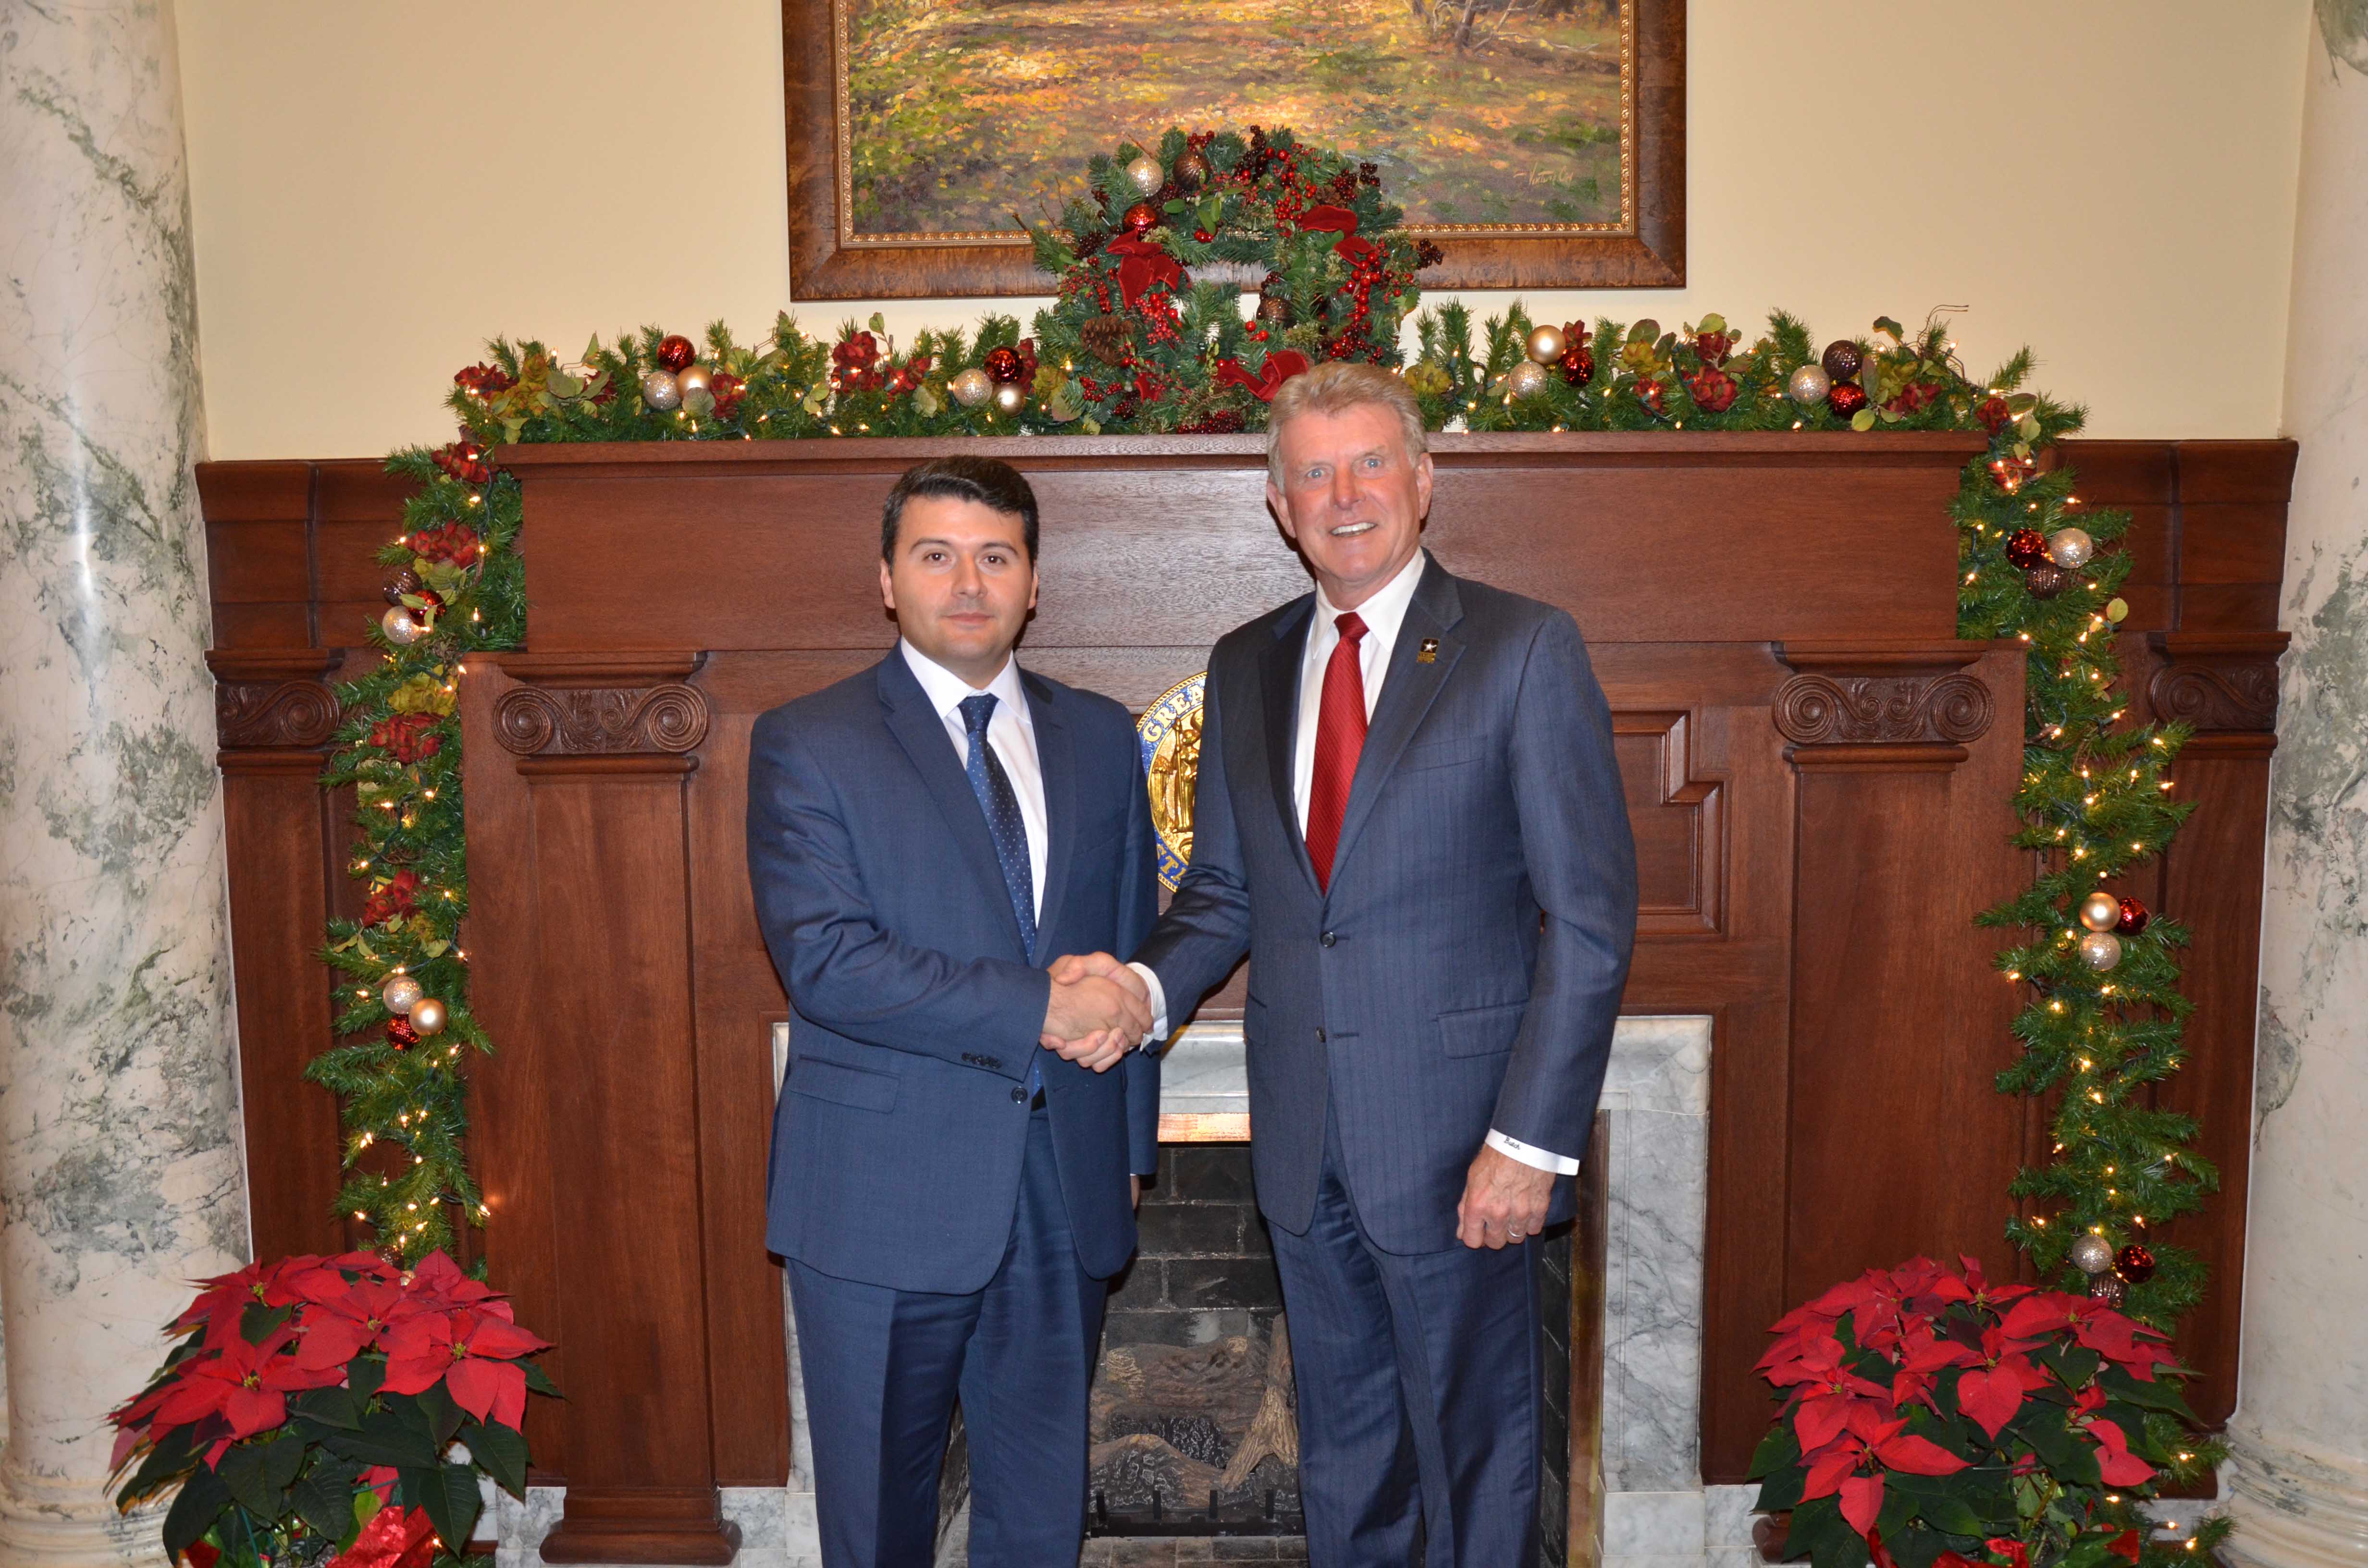 Huge potential for fruitful cooperation between Azerbaijan, Idaho